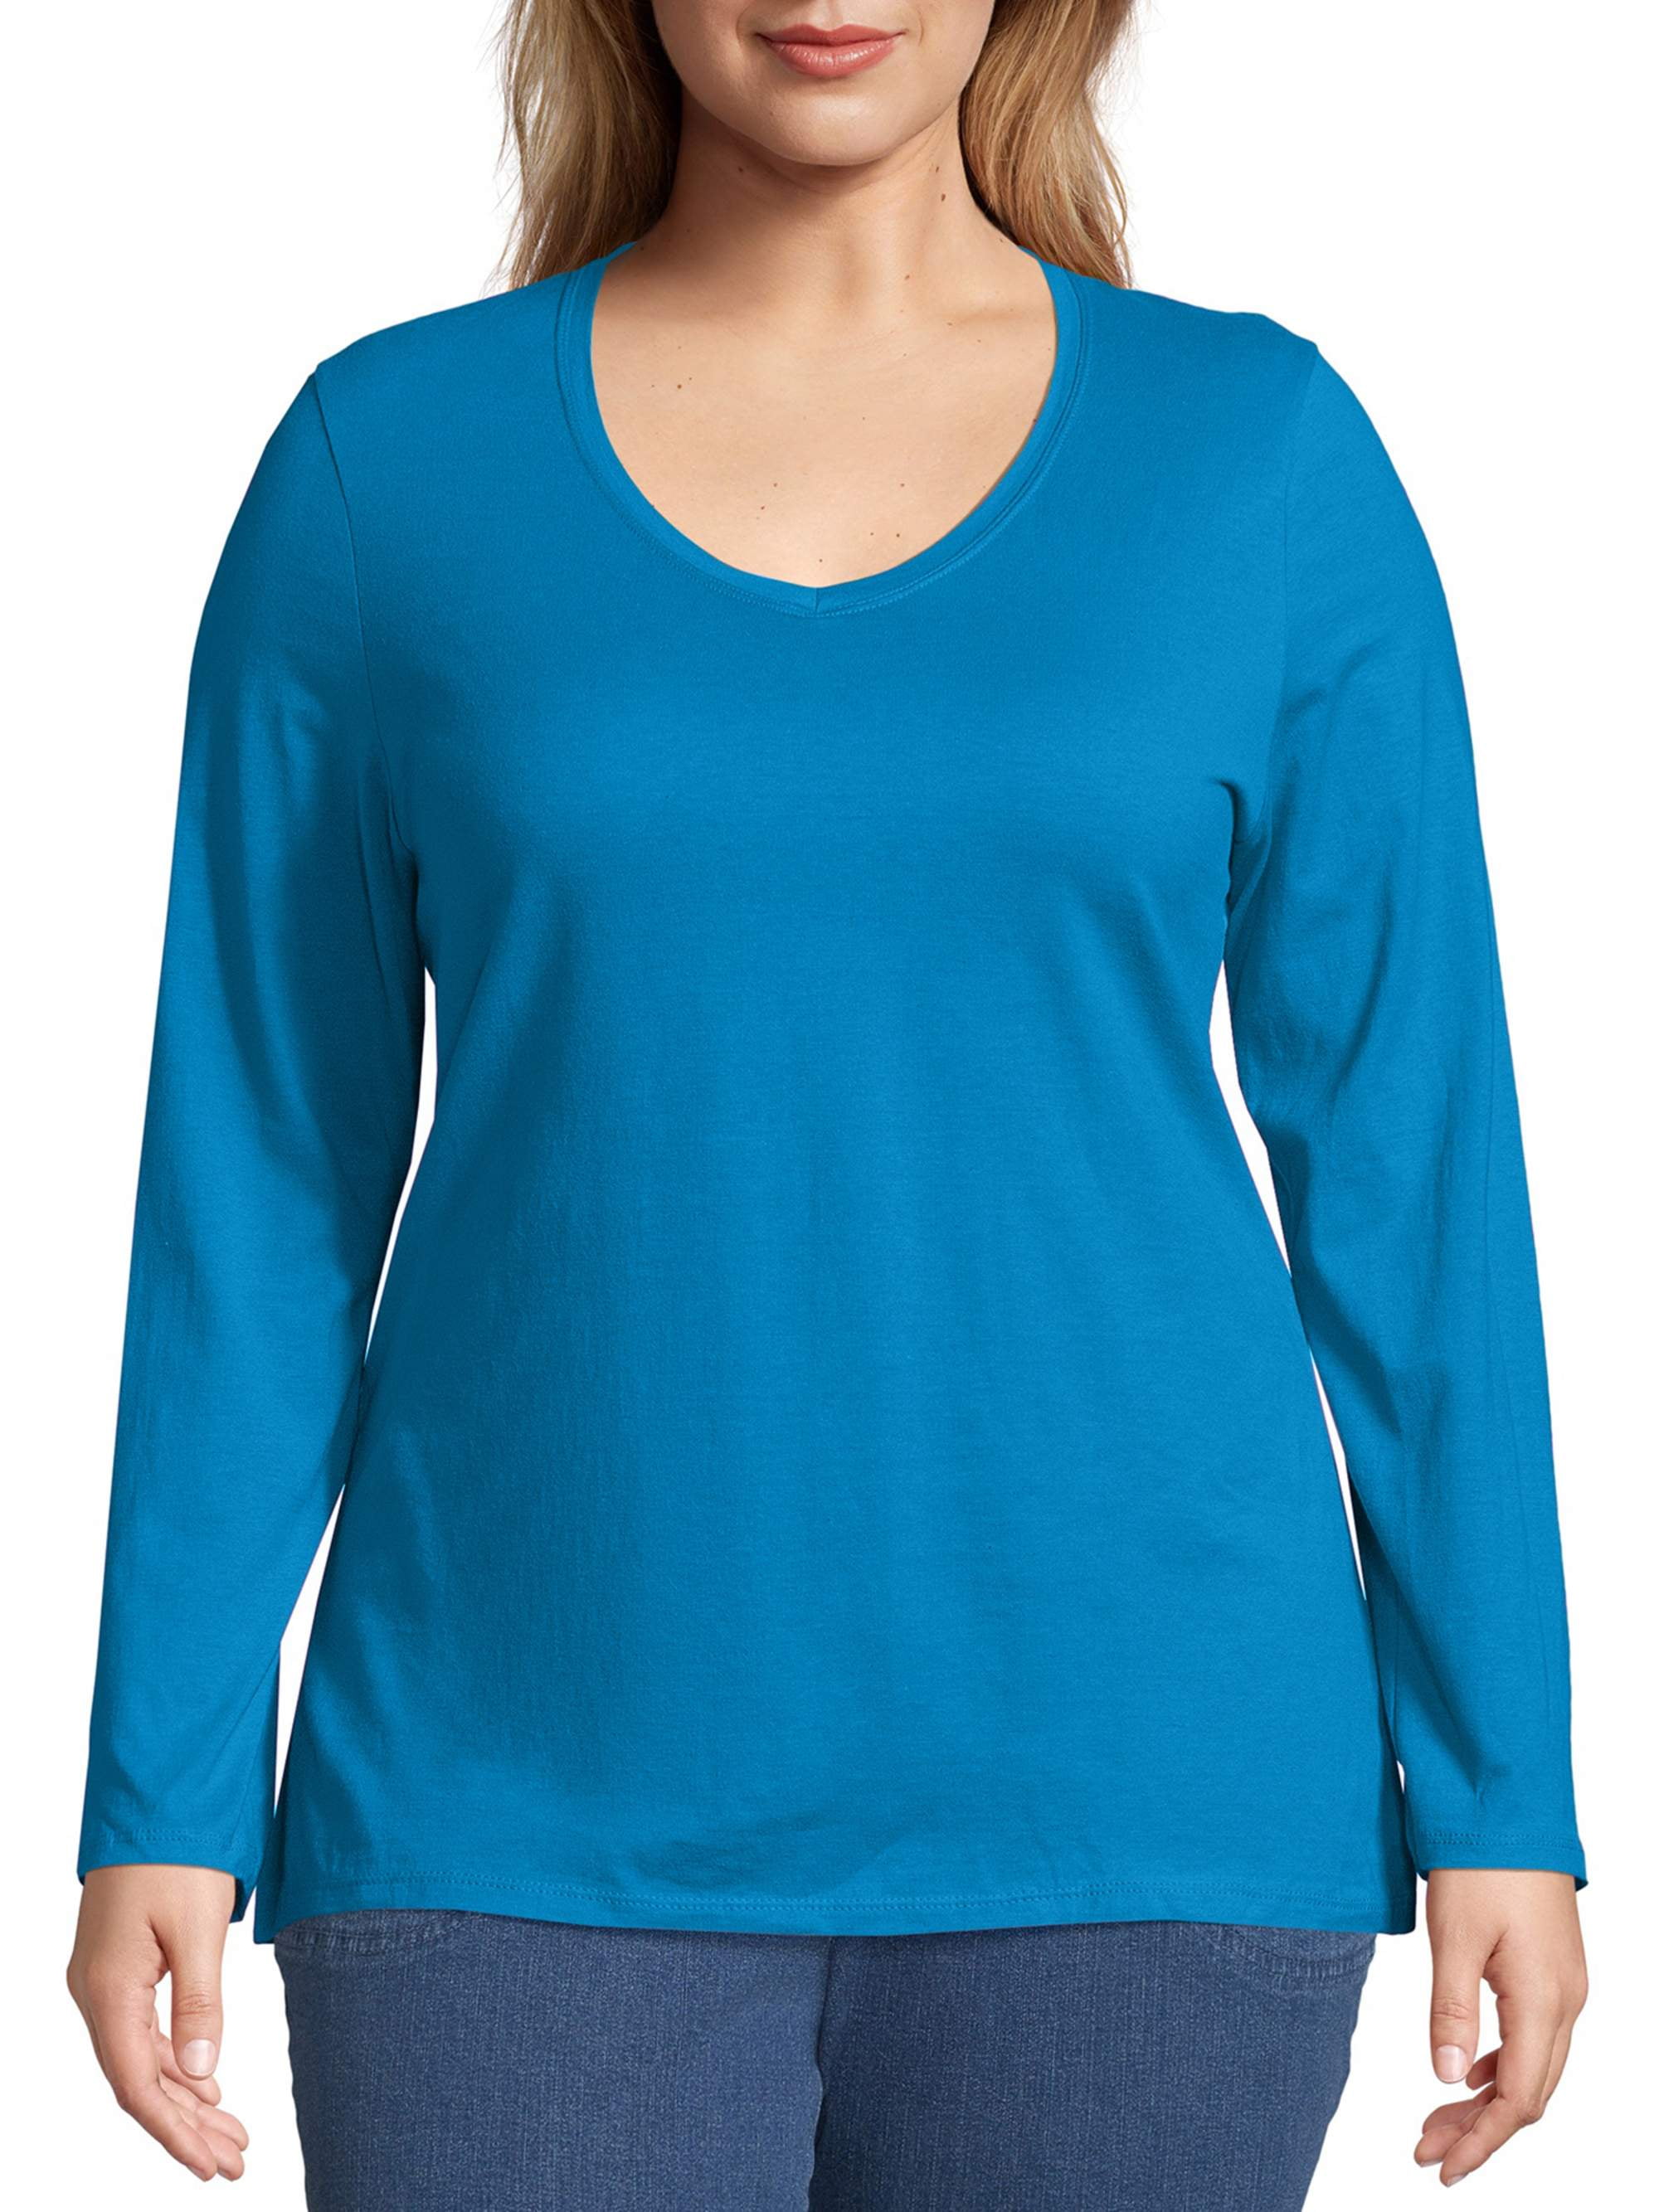 JM COLLECTION Womens Blue Long Sleeve Top Plus Size: 2X 